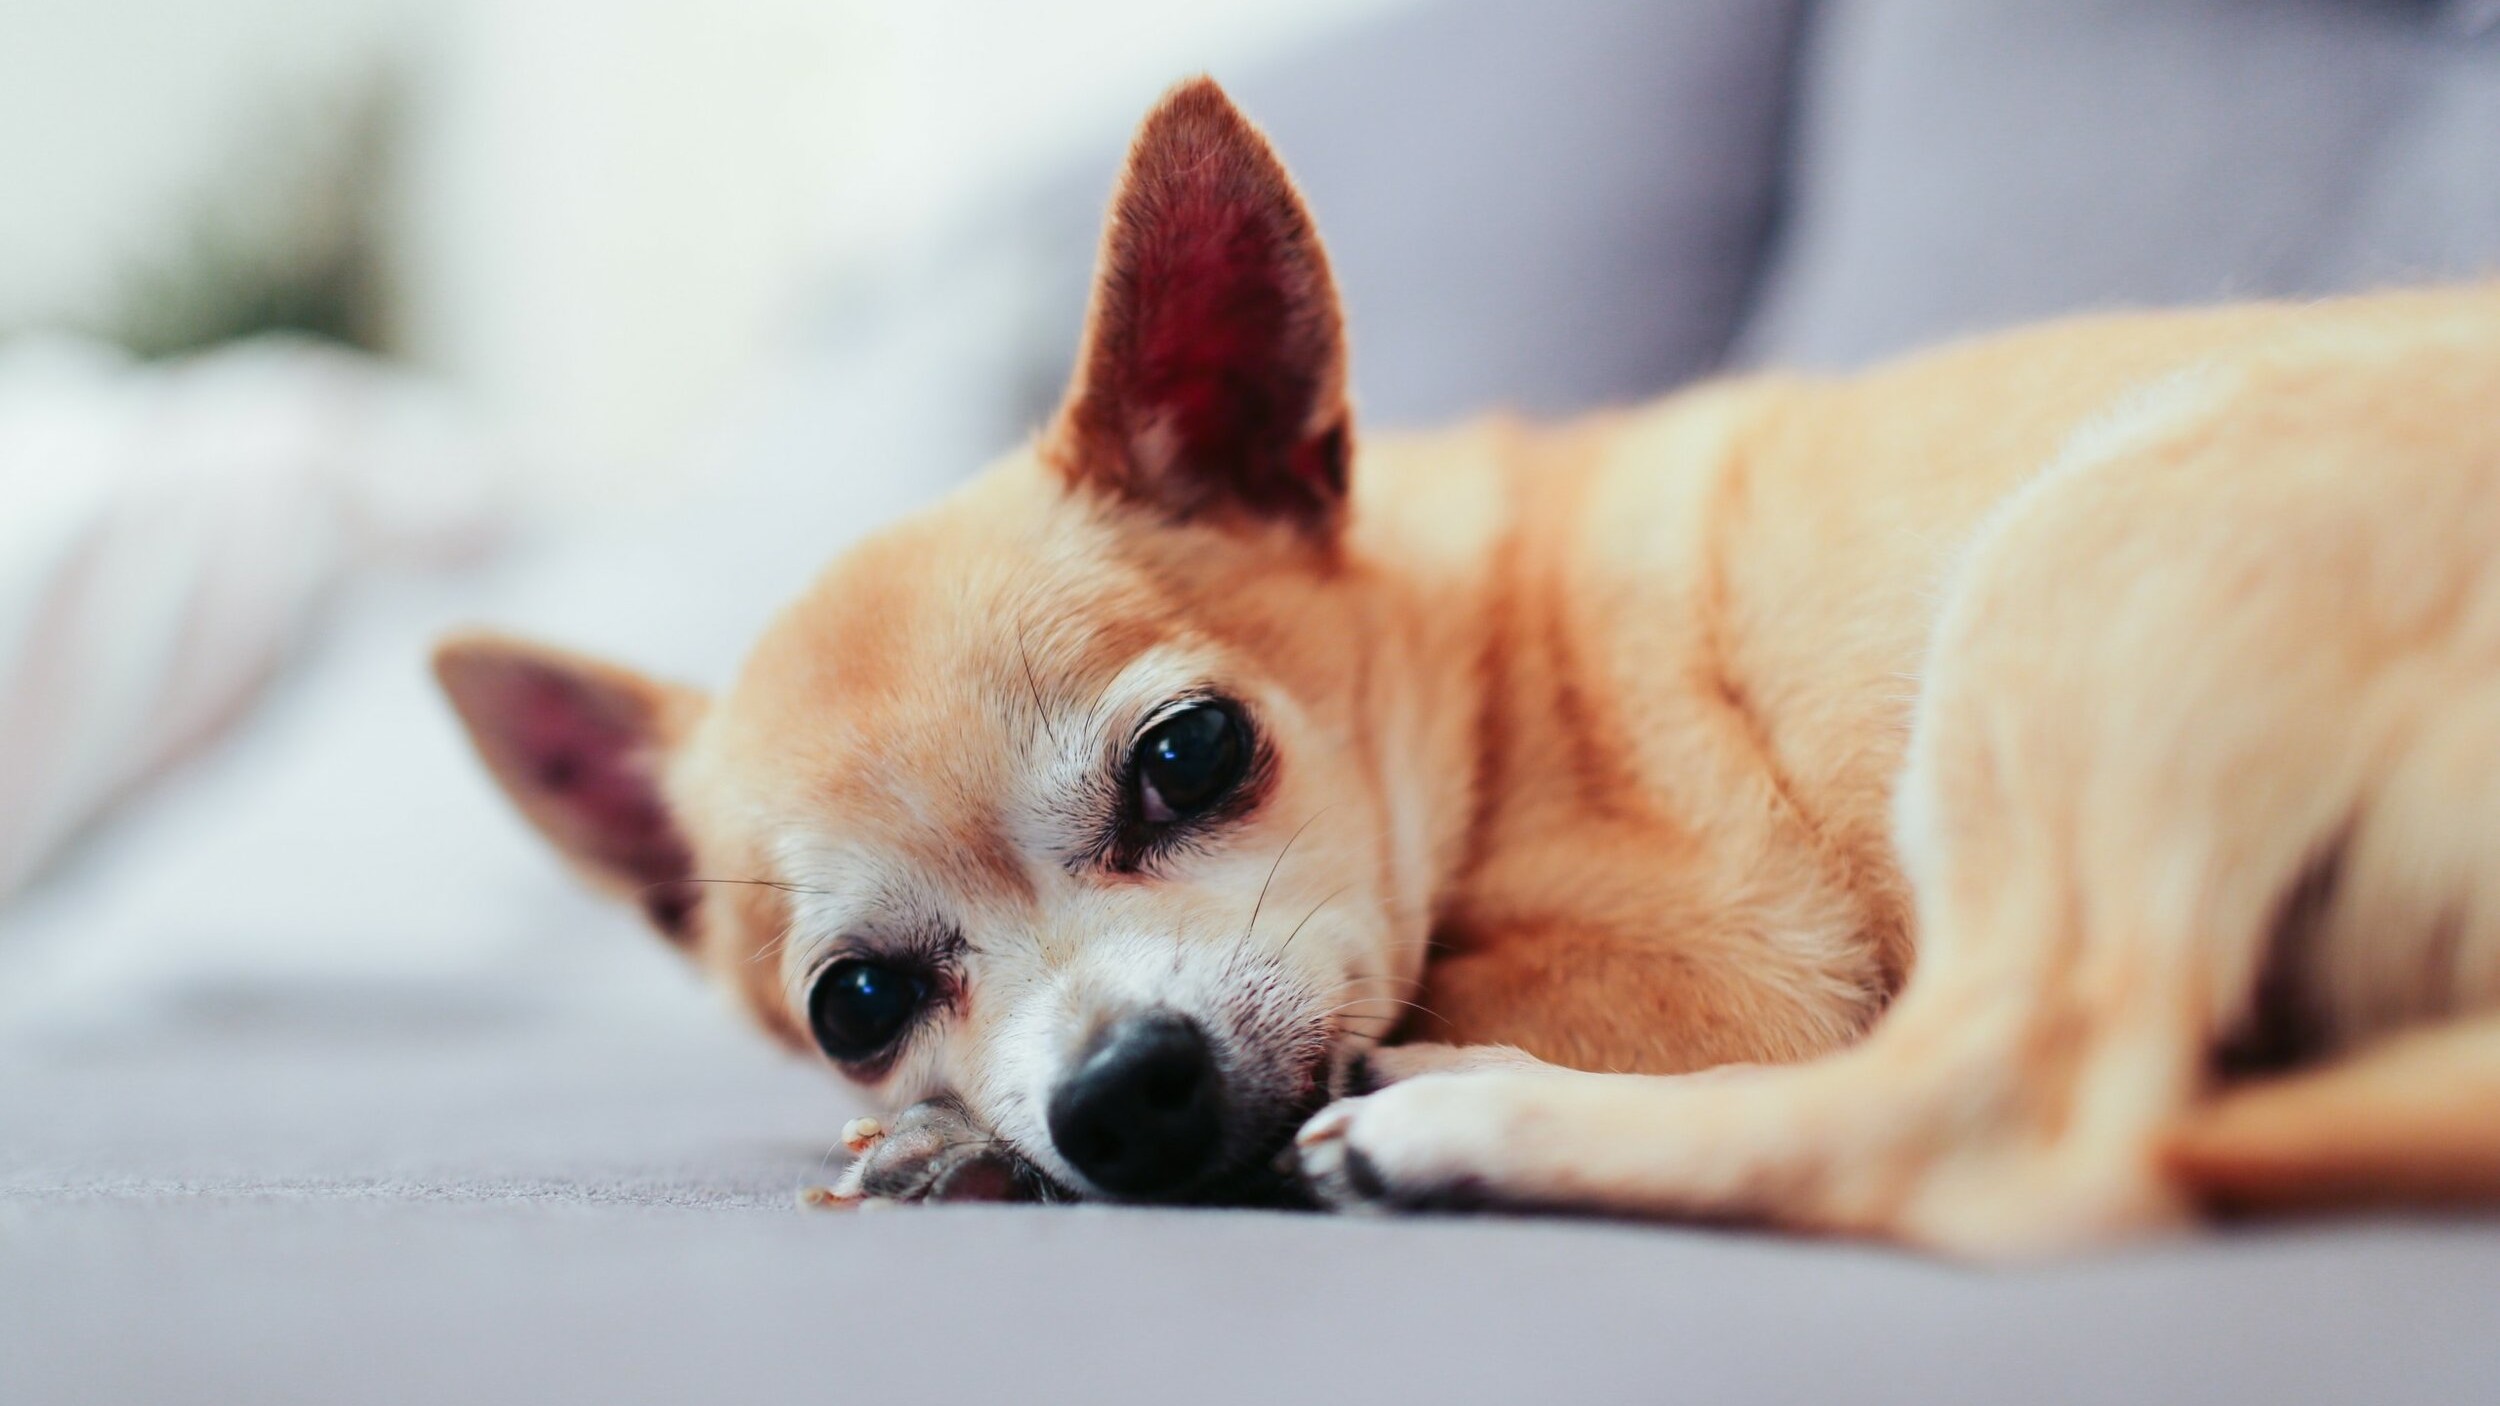 Chihuahua lies on sofa